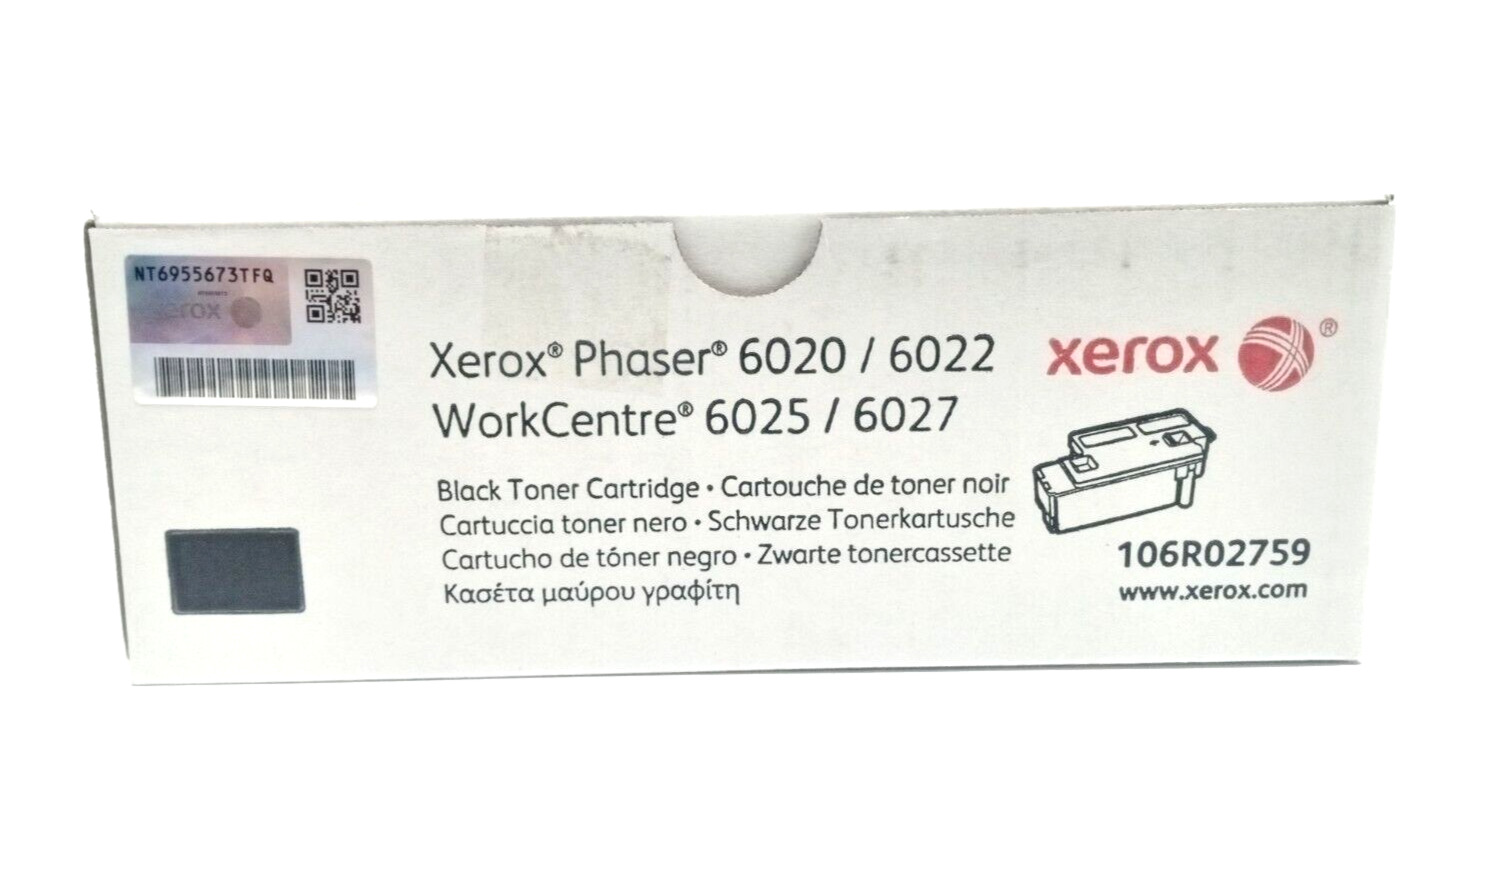 Genuine Xerox Phaser 6020/6022 WorkCentre 6025 Black Toner Cartridge 106R02759